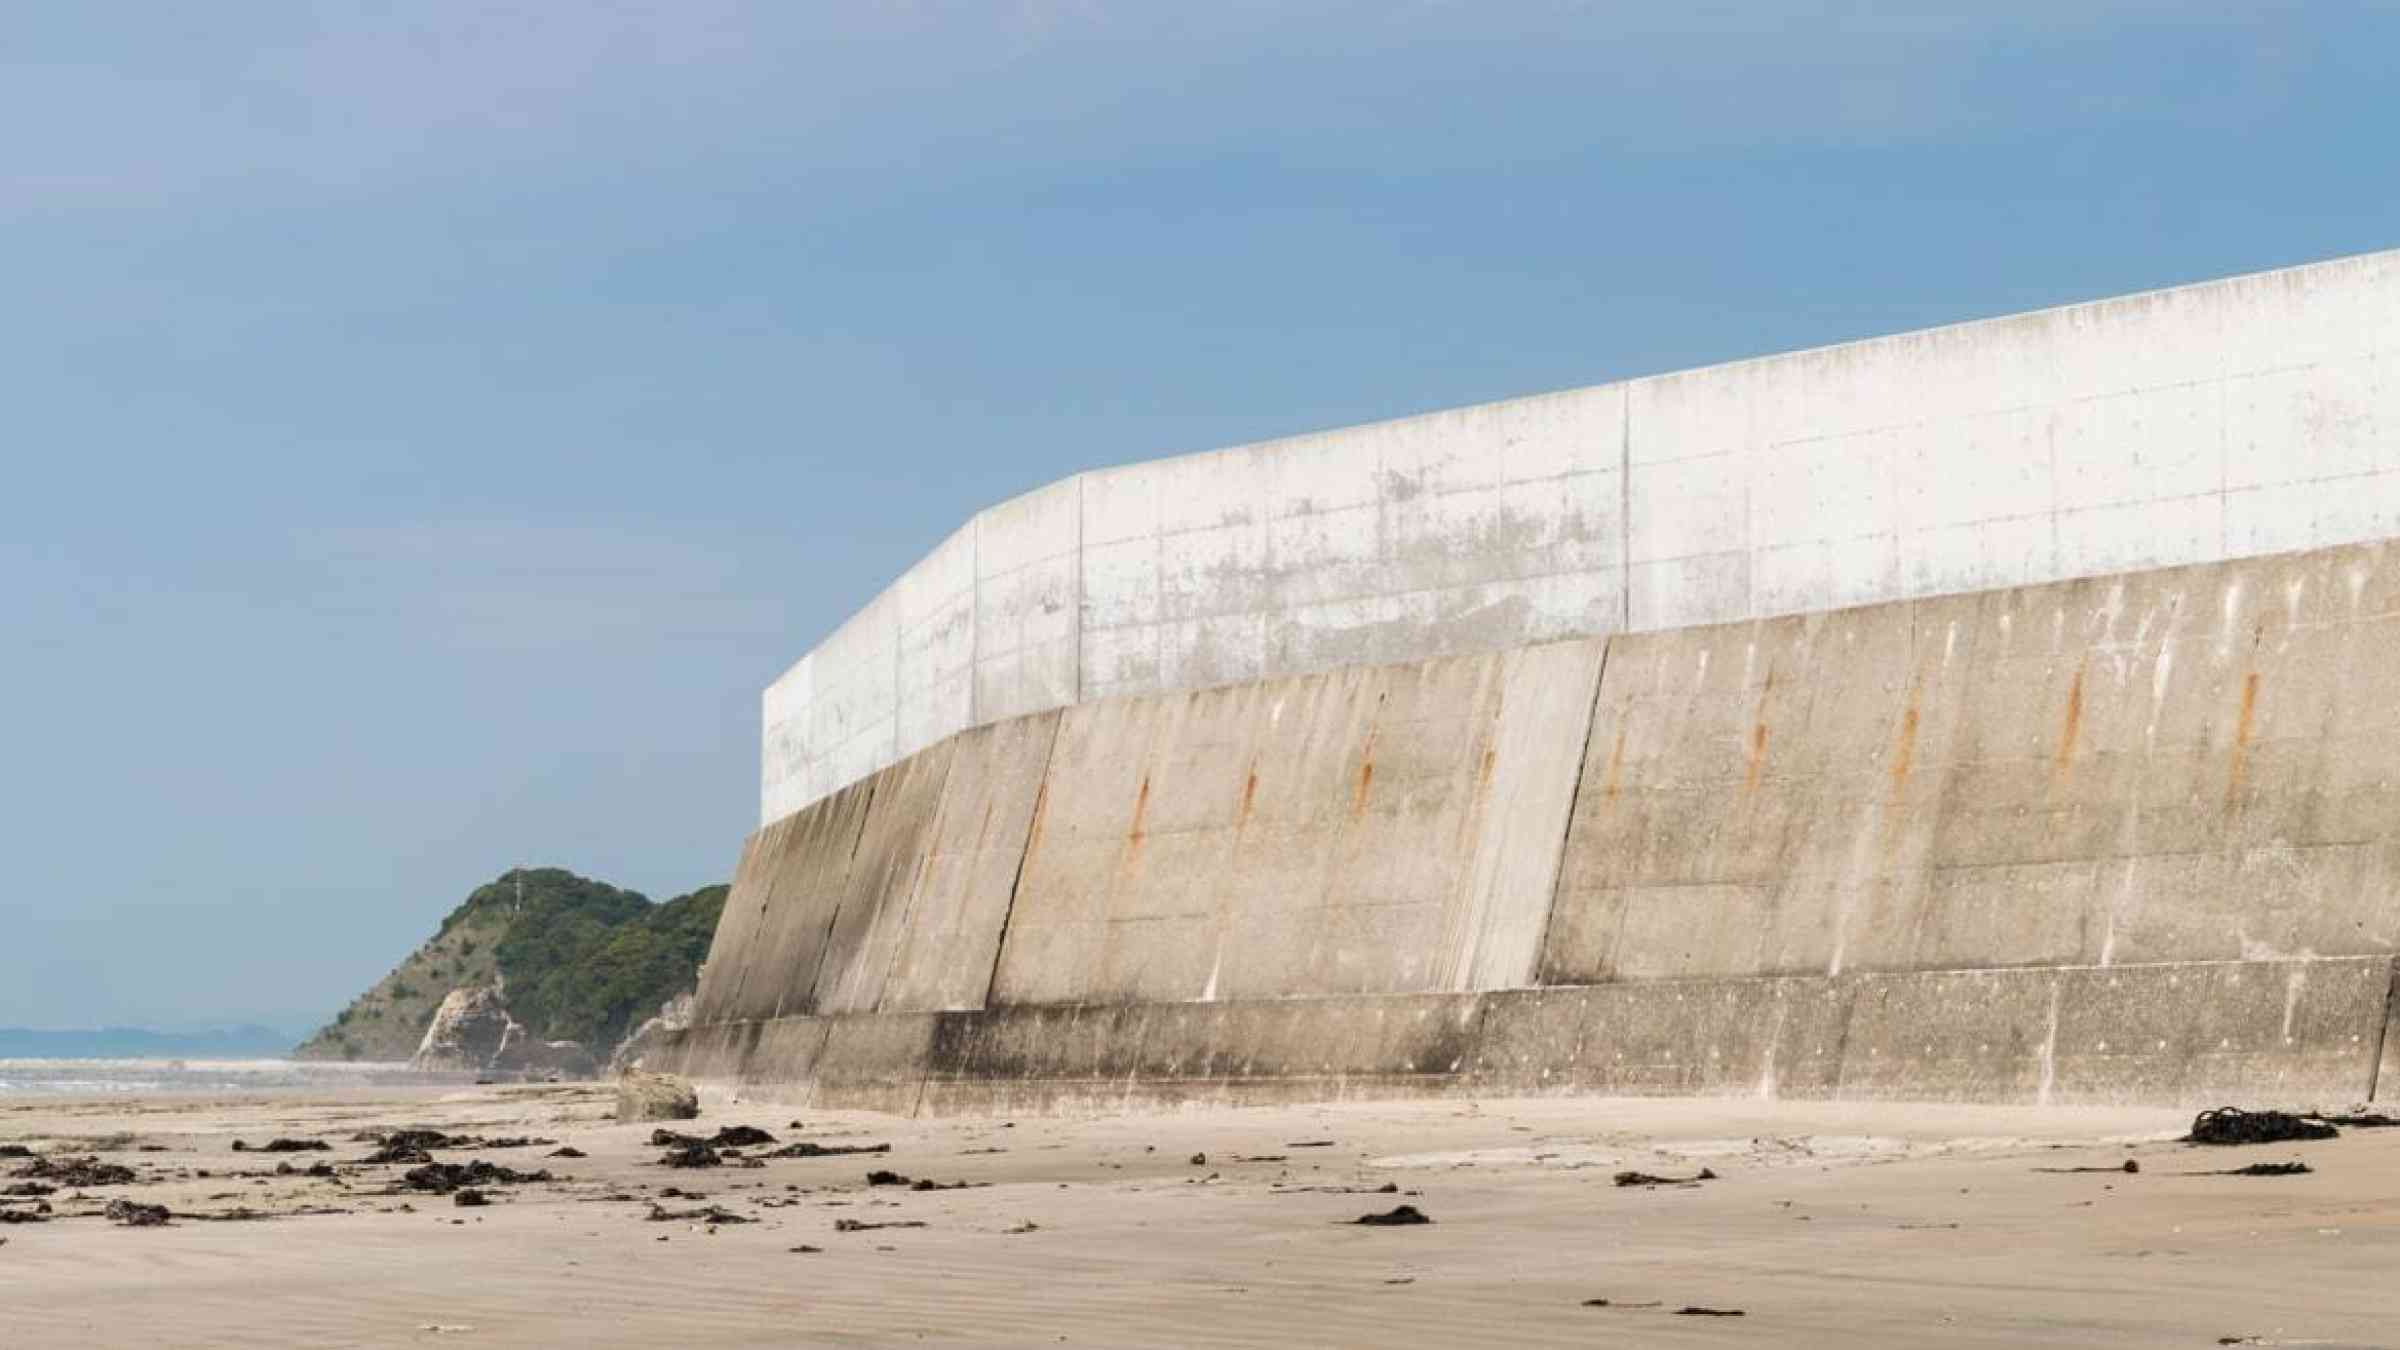 Concrete tsunami protection sea wall on a beach